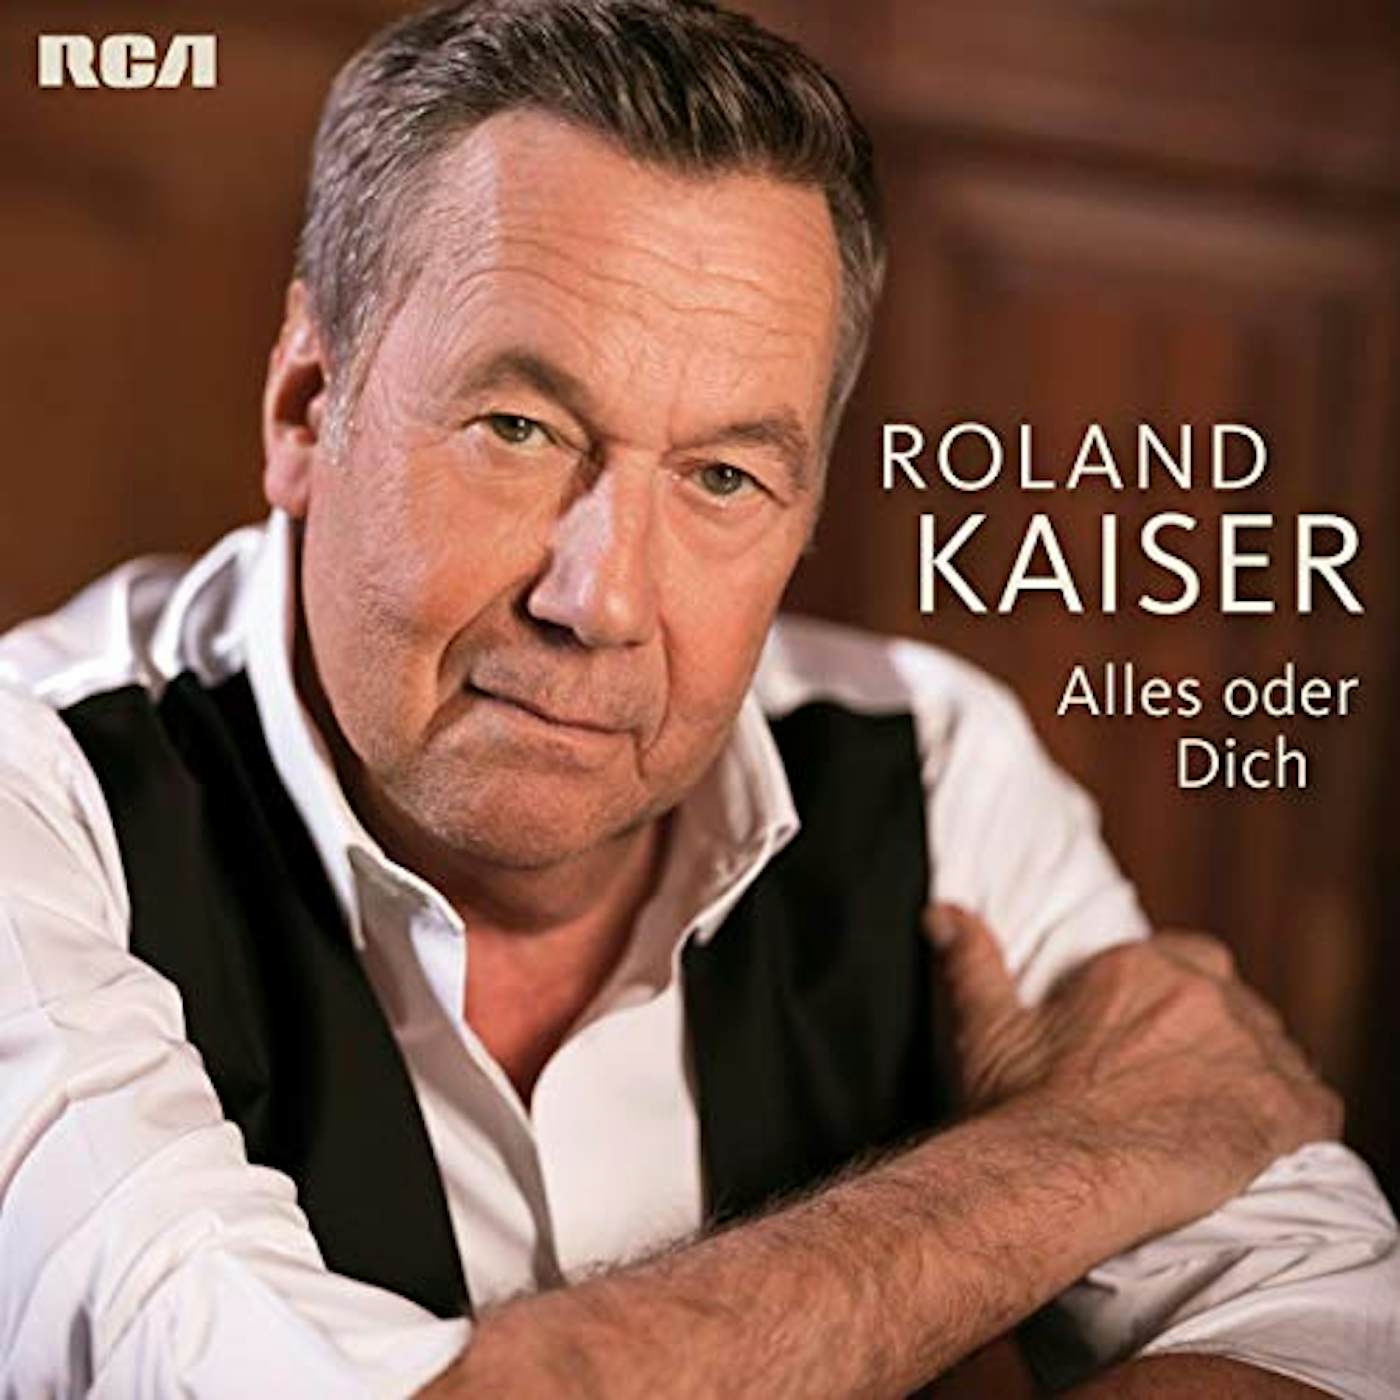 Roland Kaiser ALLES ODER DICH CD